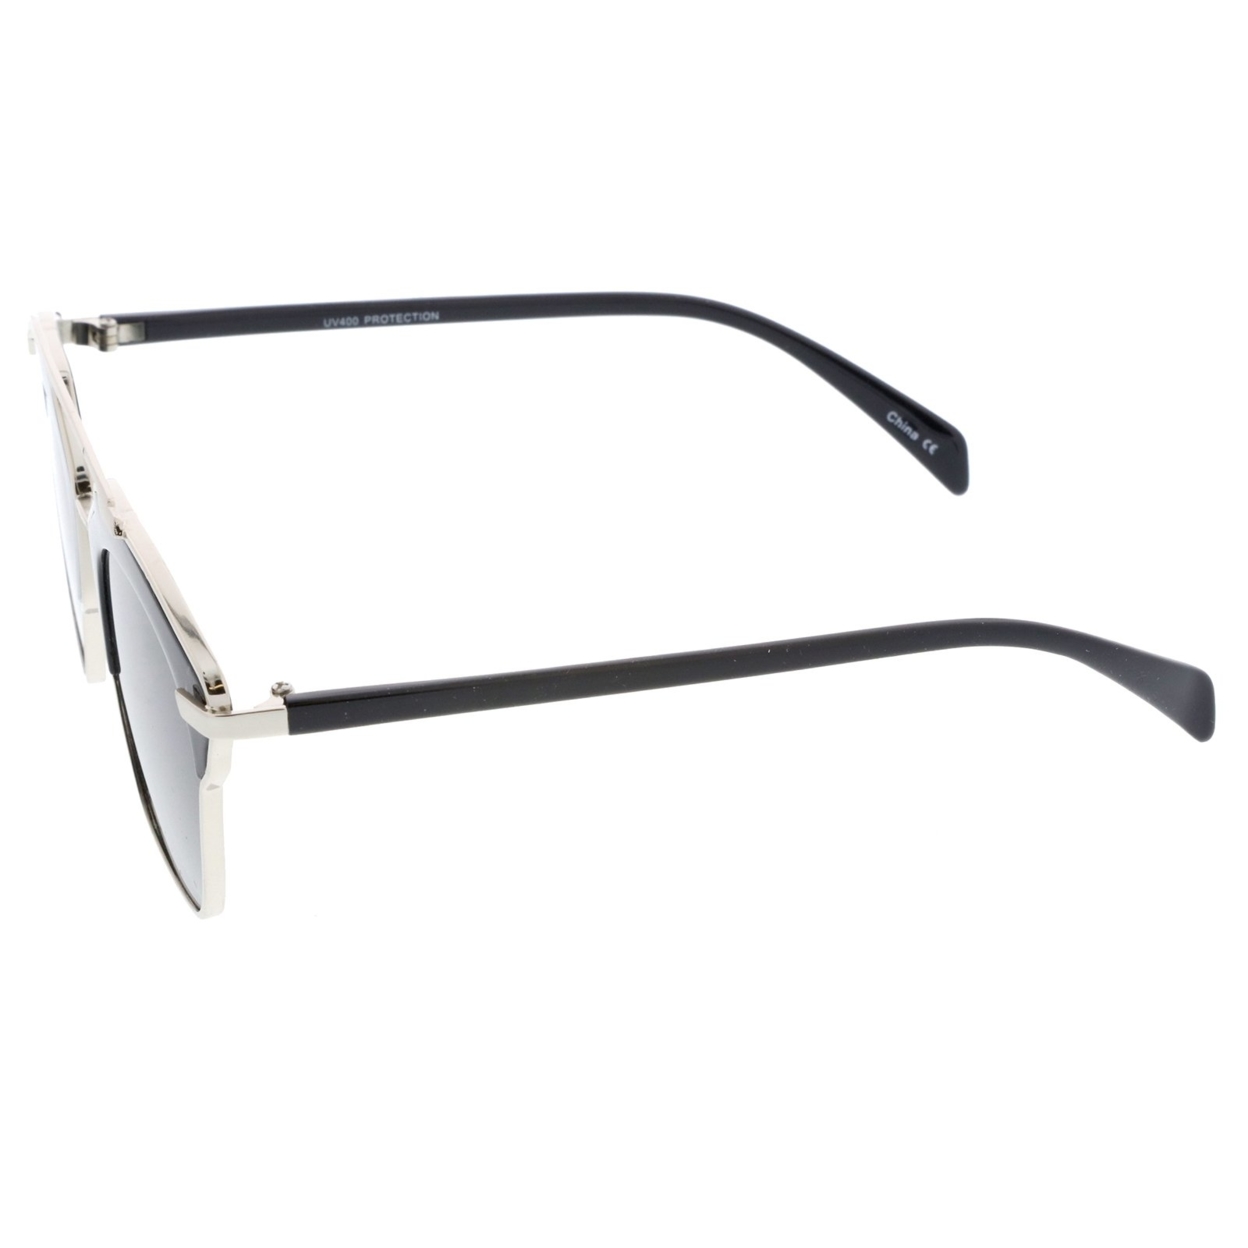 High Fashion Two-Toned Pantos Crossbar Neutral-Colored Lens Aviator Sunglasses 52mm - Black-Gold / Smoke